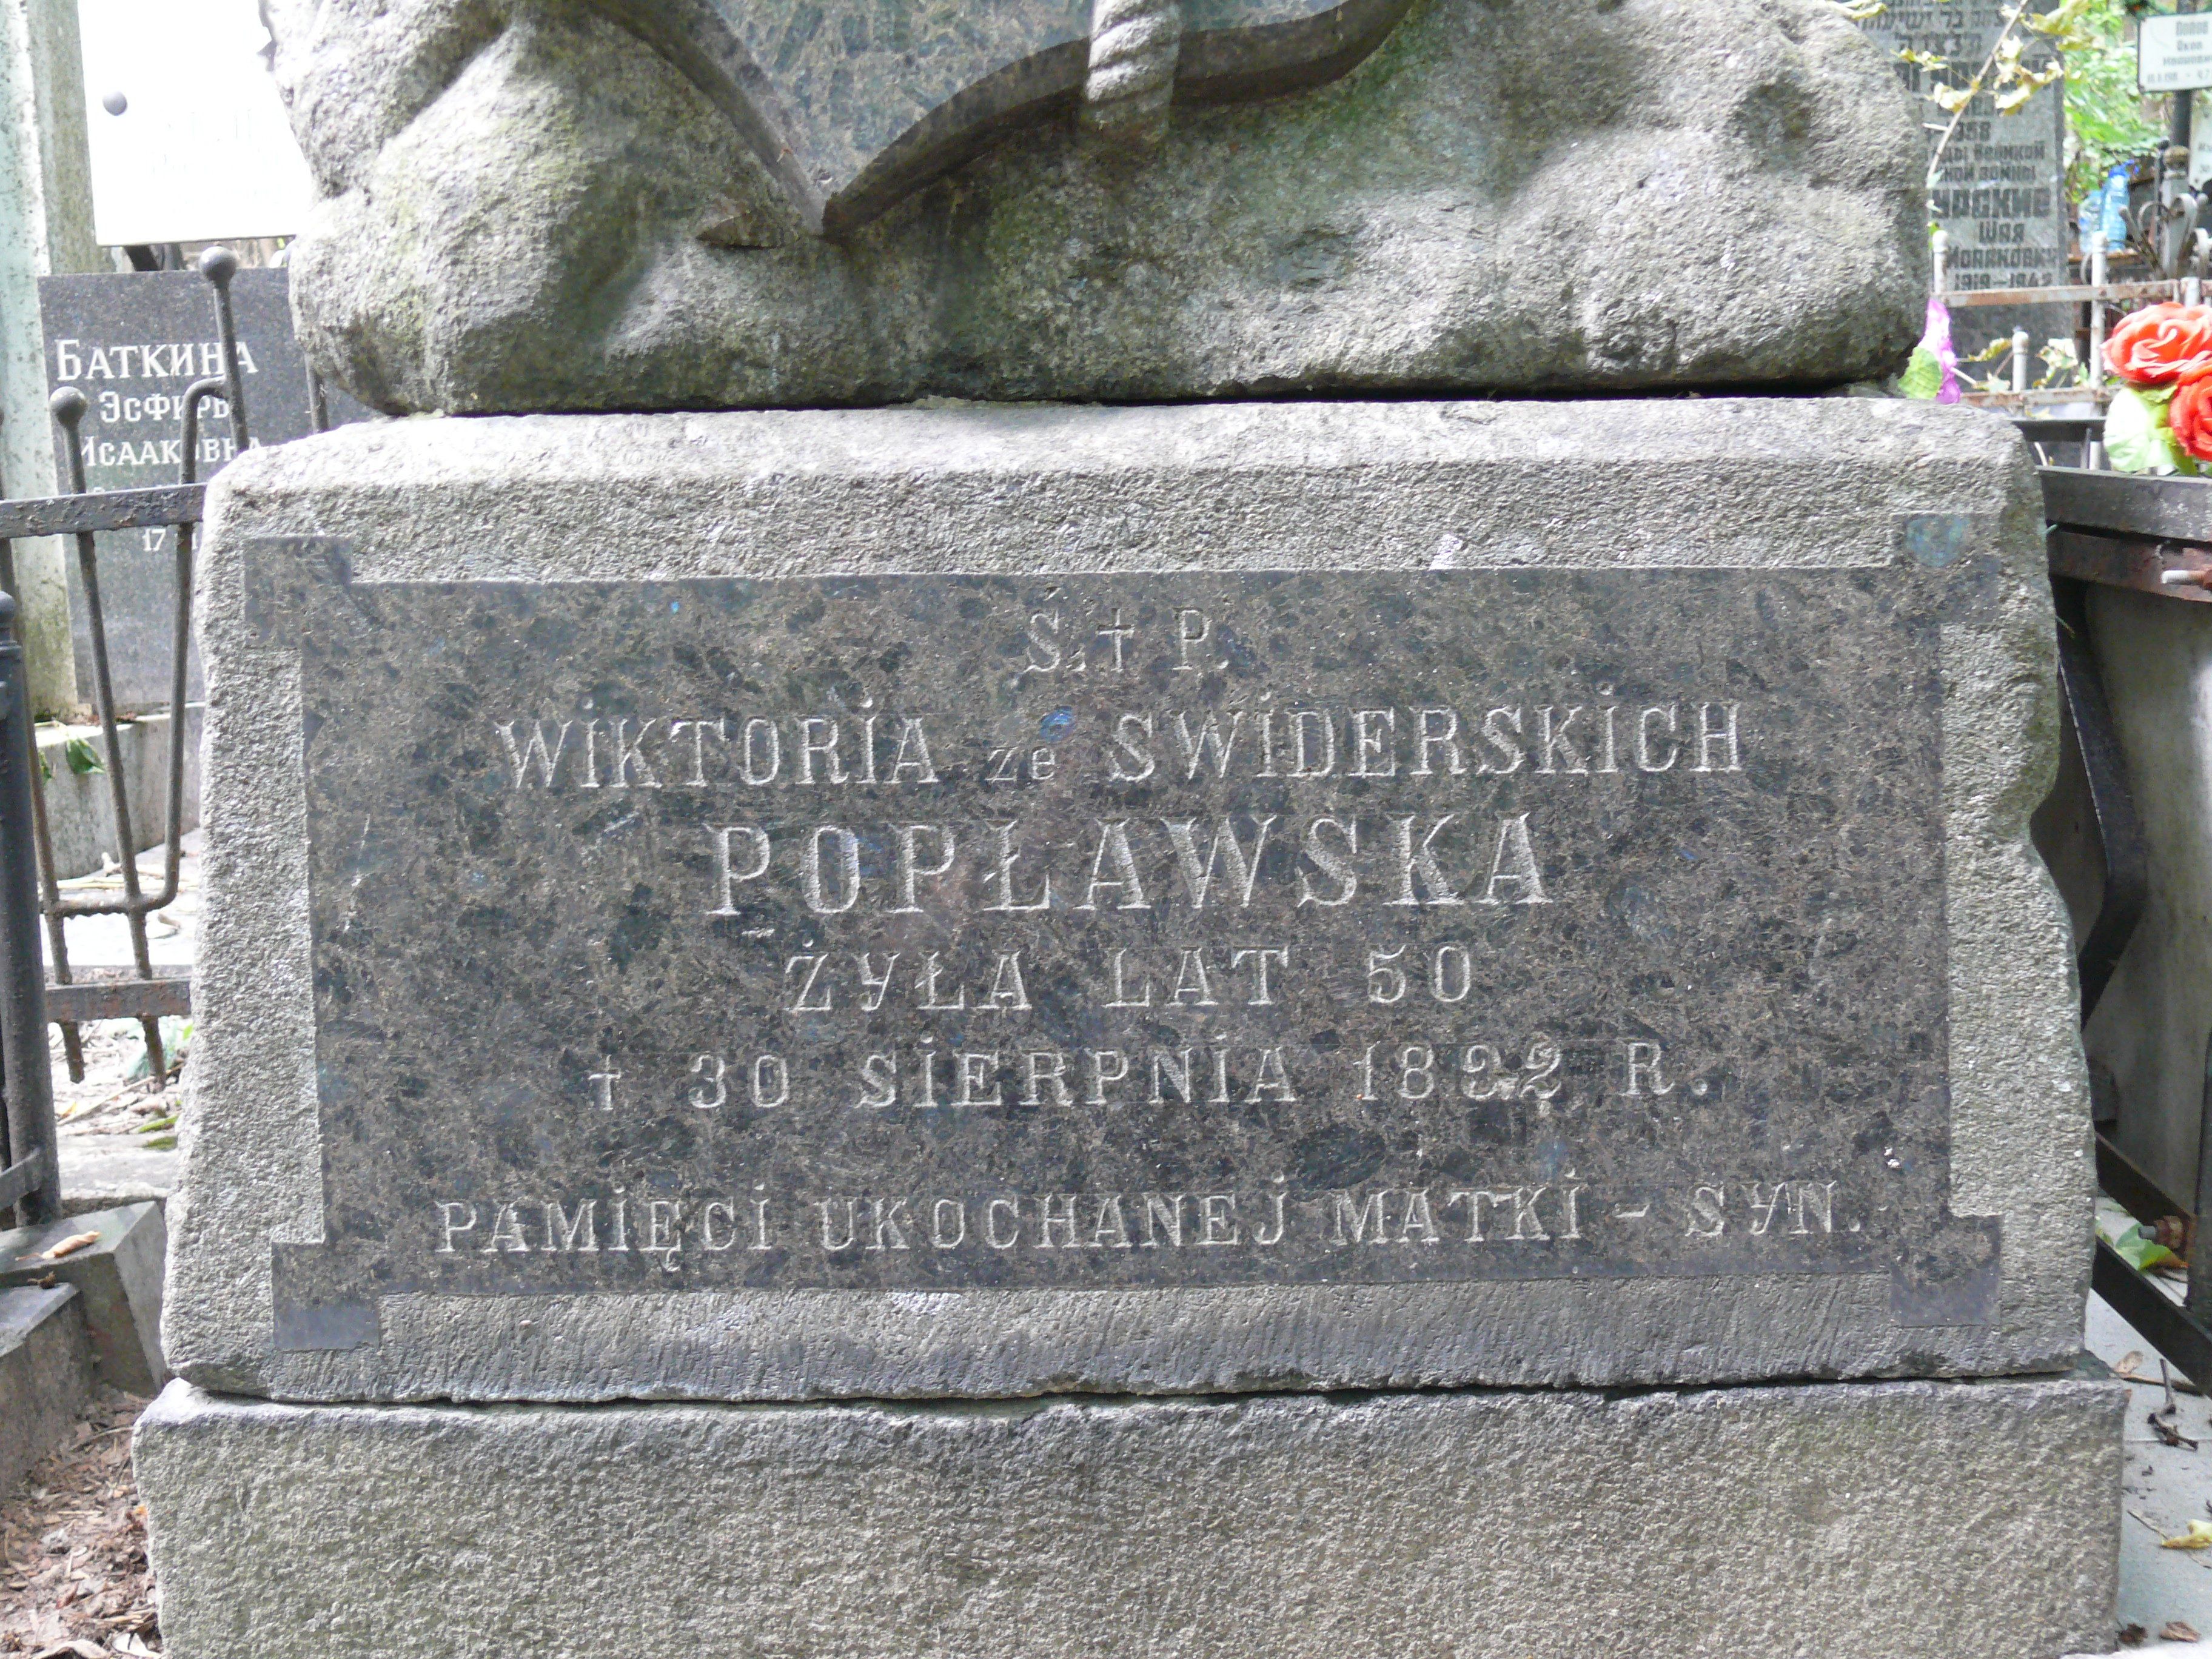 Gravestone inscription of Wiktoria Popławska